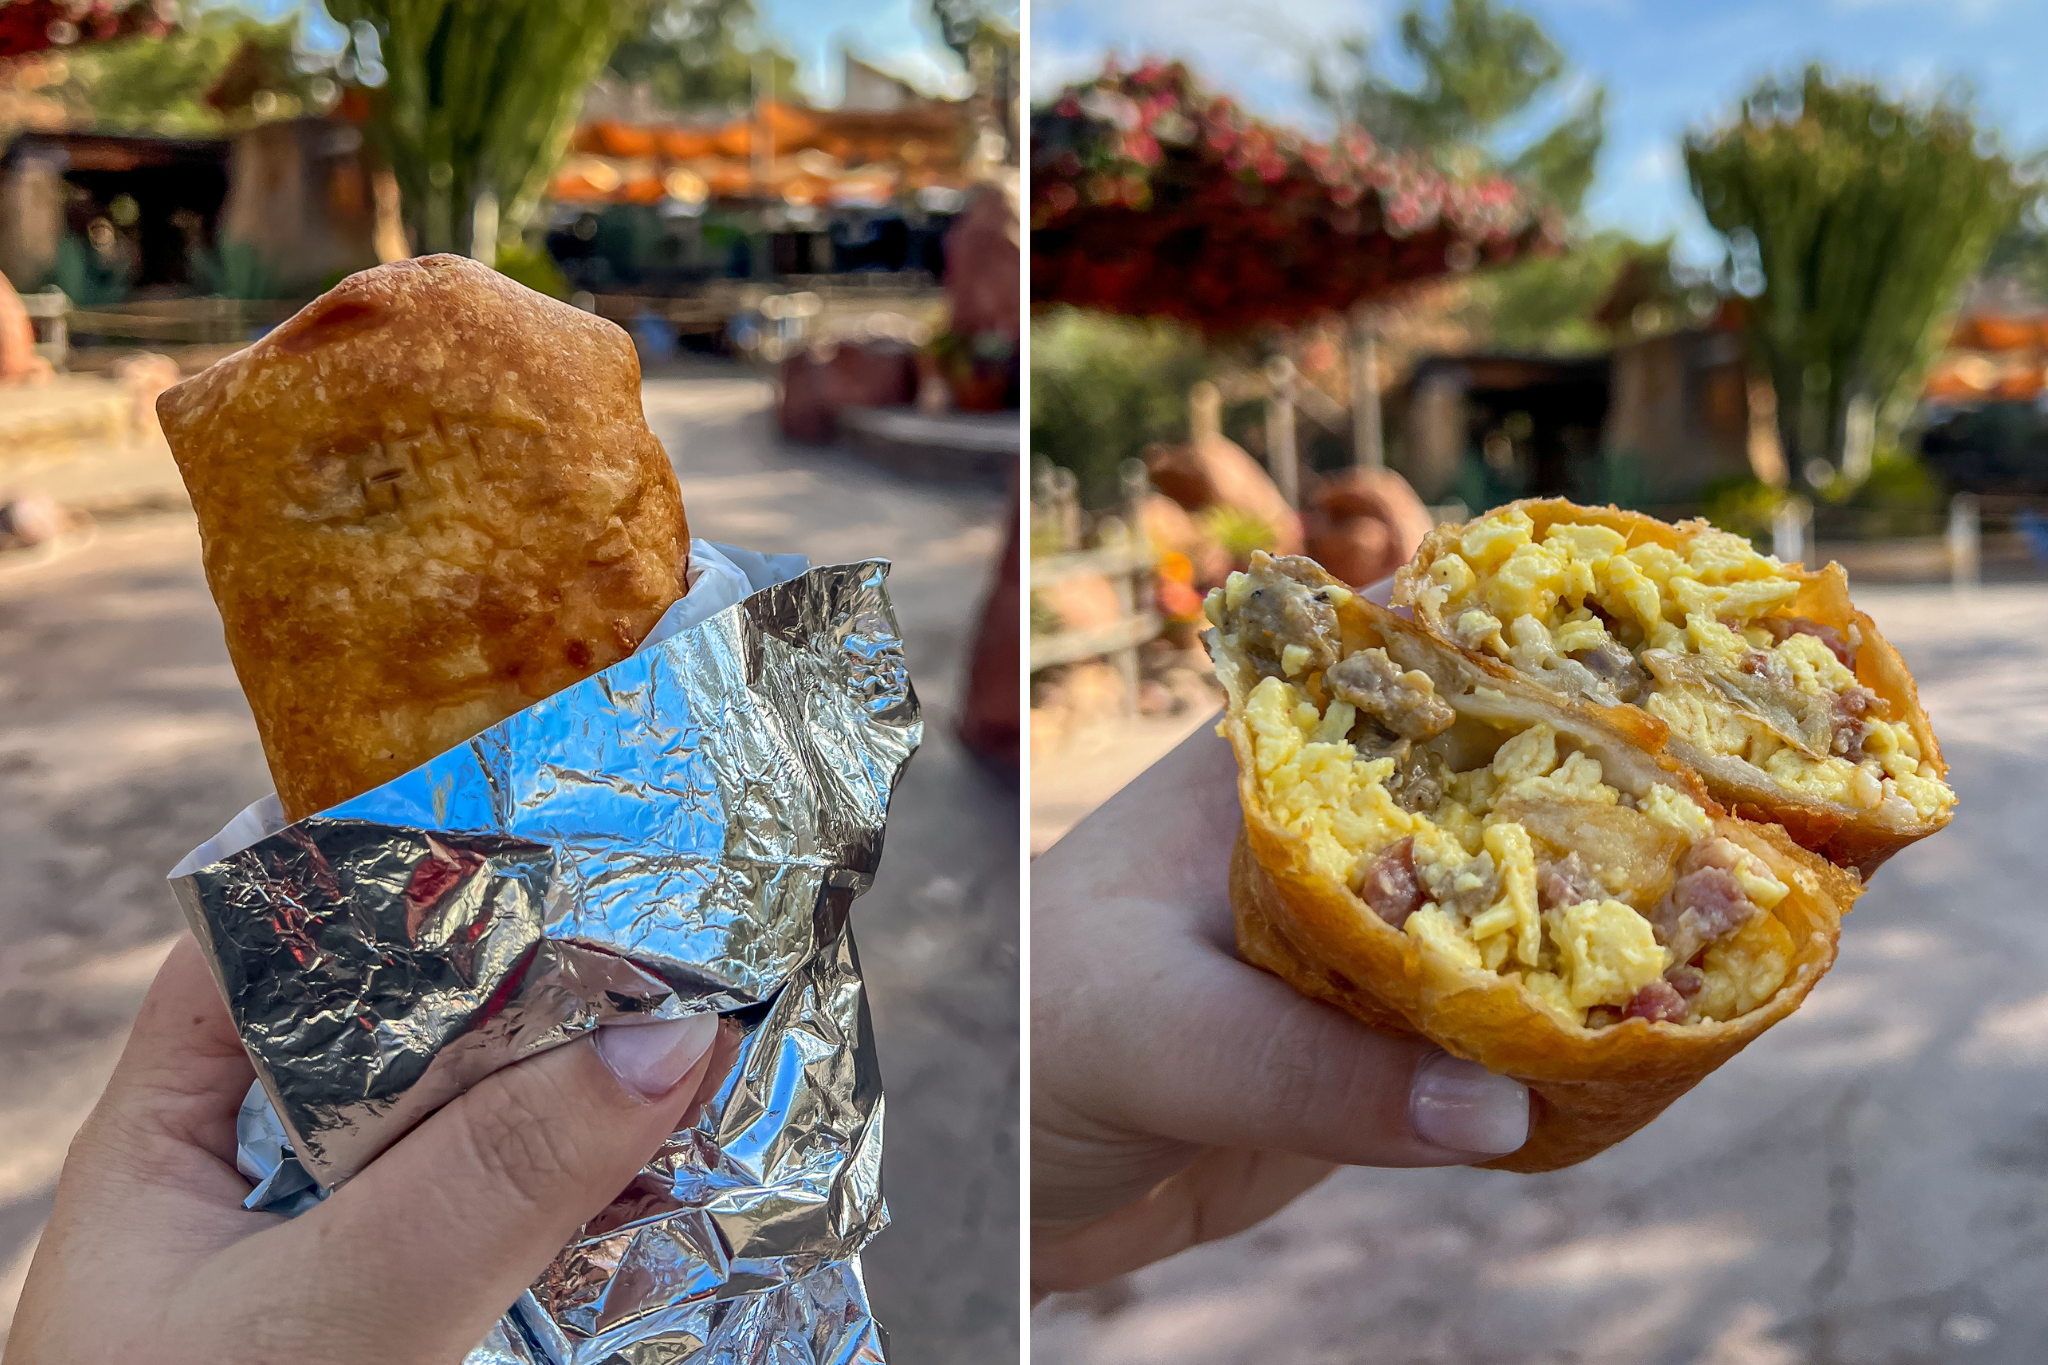 Disneyland breakfast chimichanga found near Big Thunder Mountain